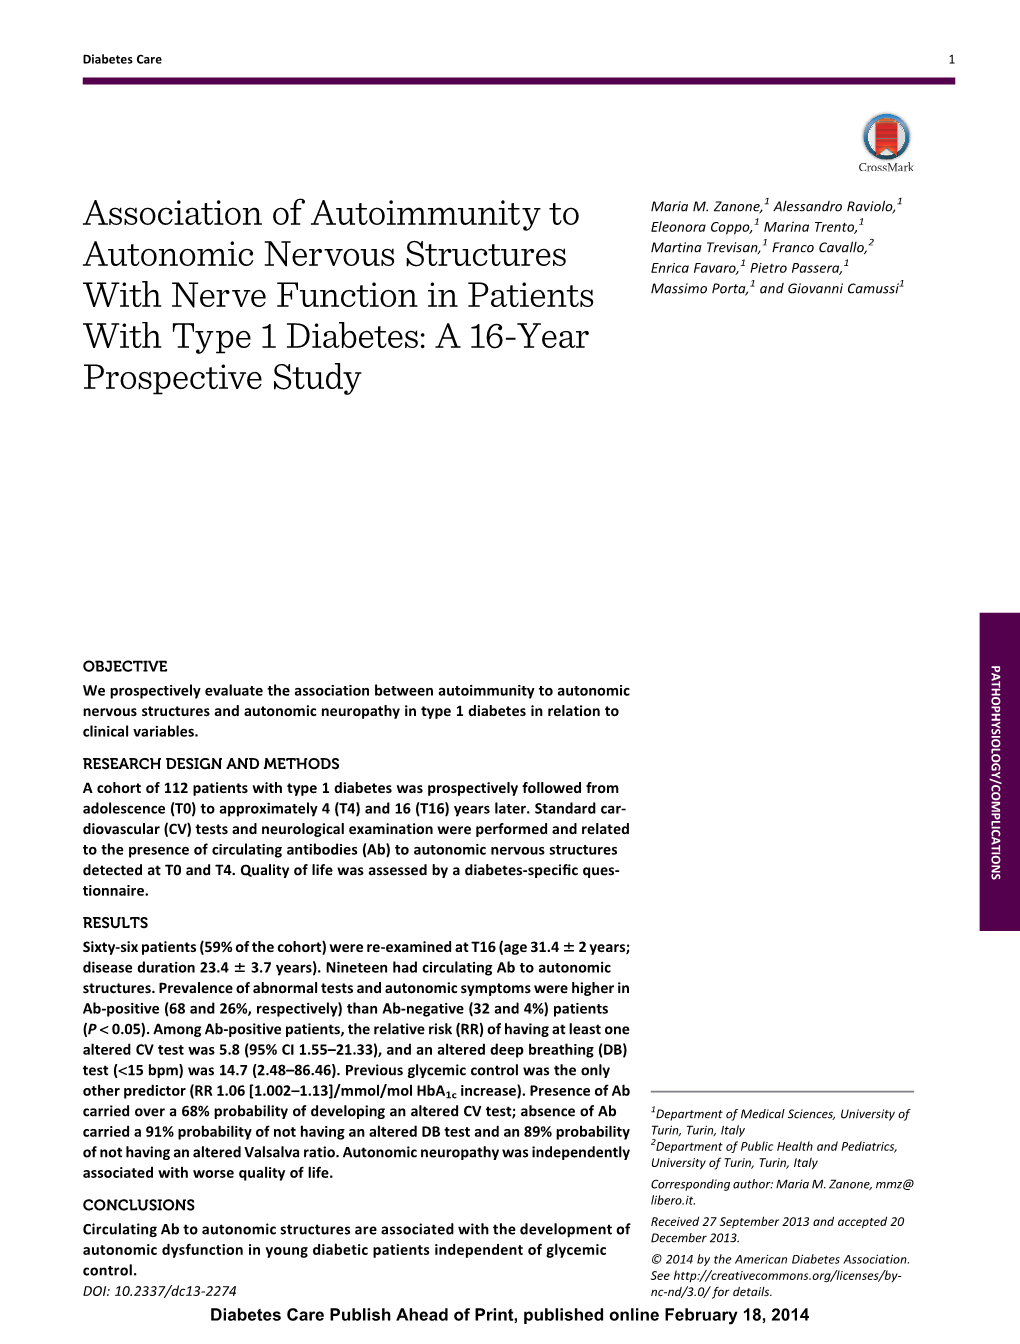 Association of Autoimmunity to Autonomic